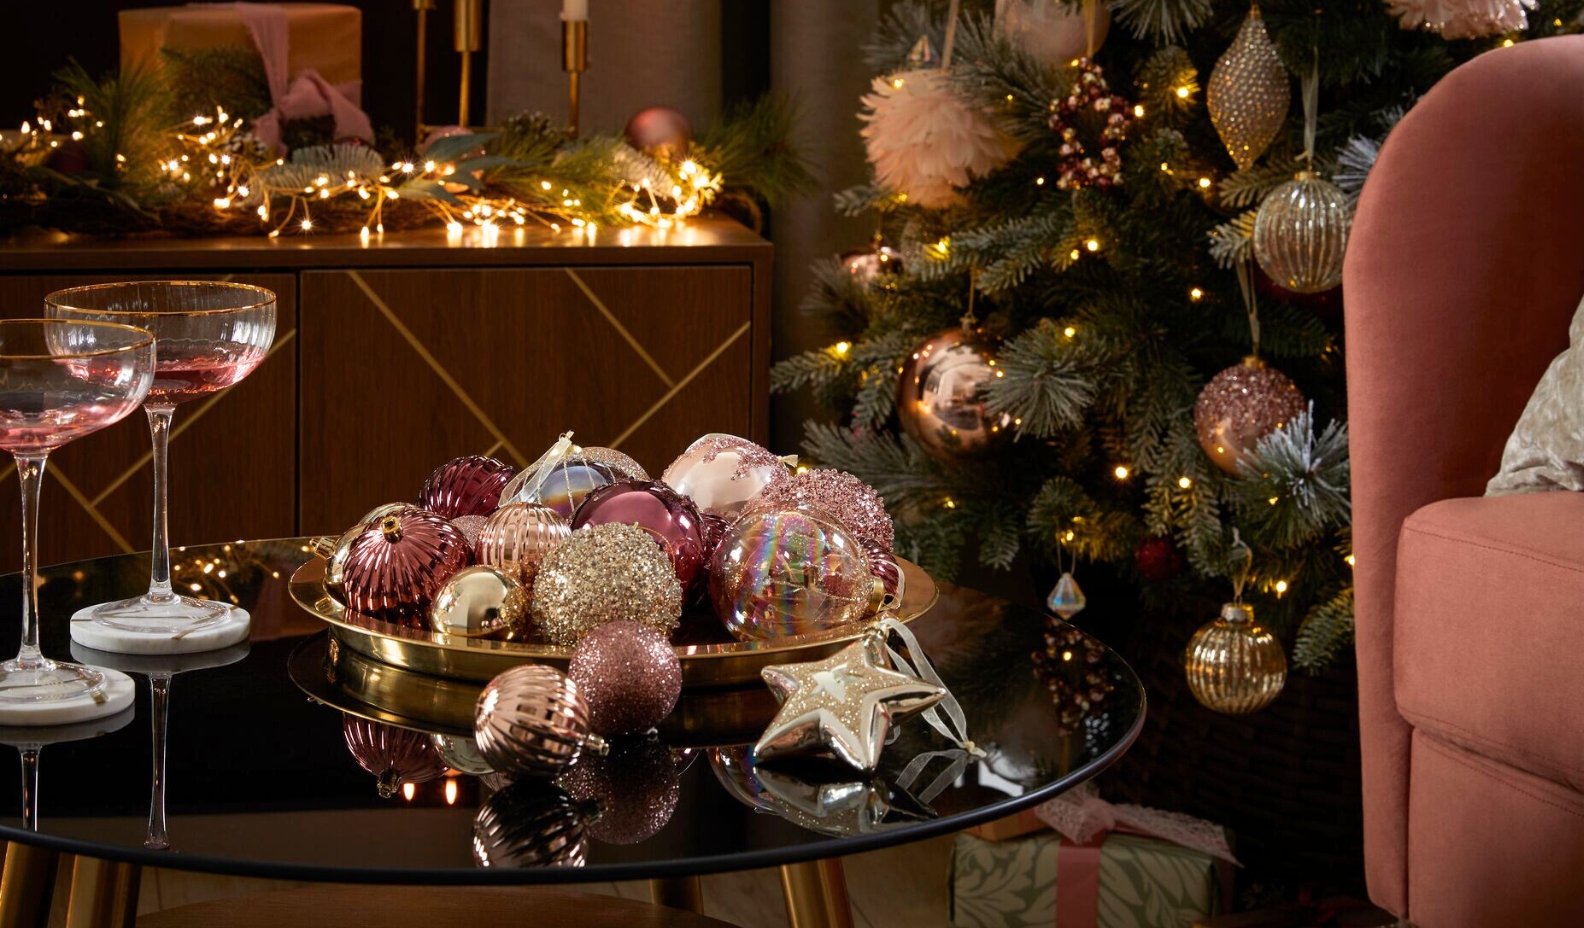 Elegant Christmas tree decorating ideas